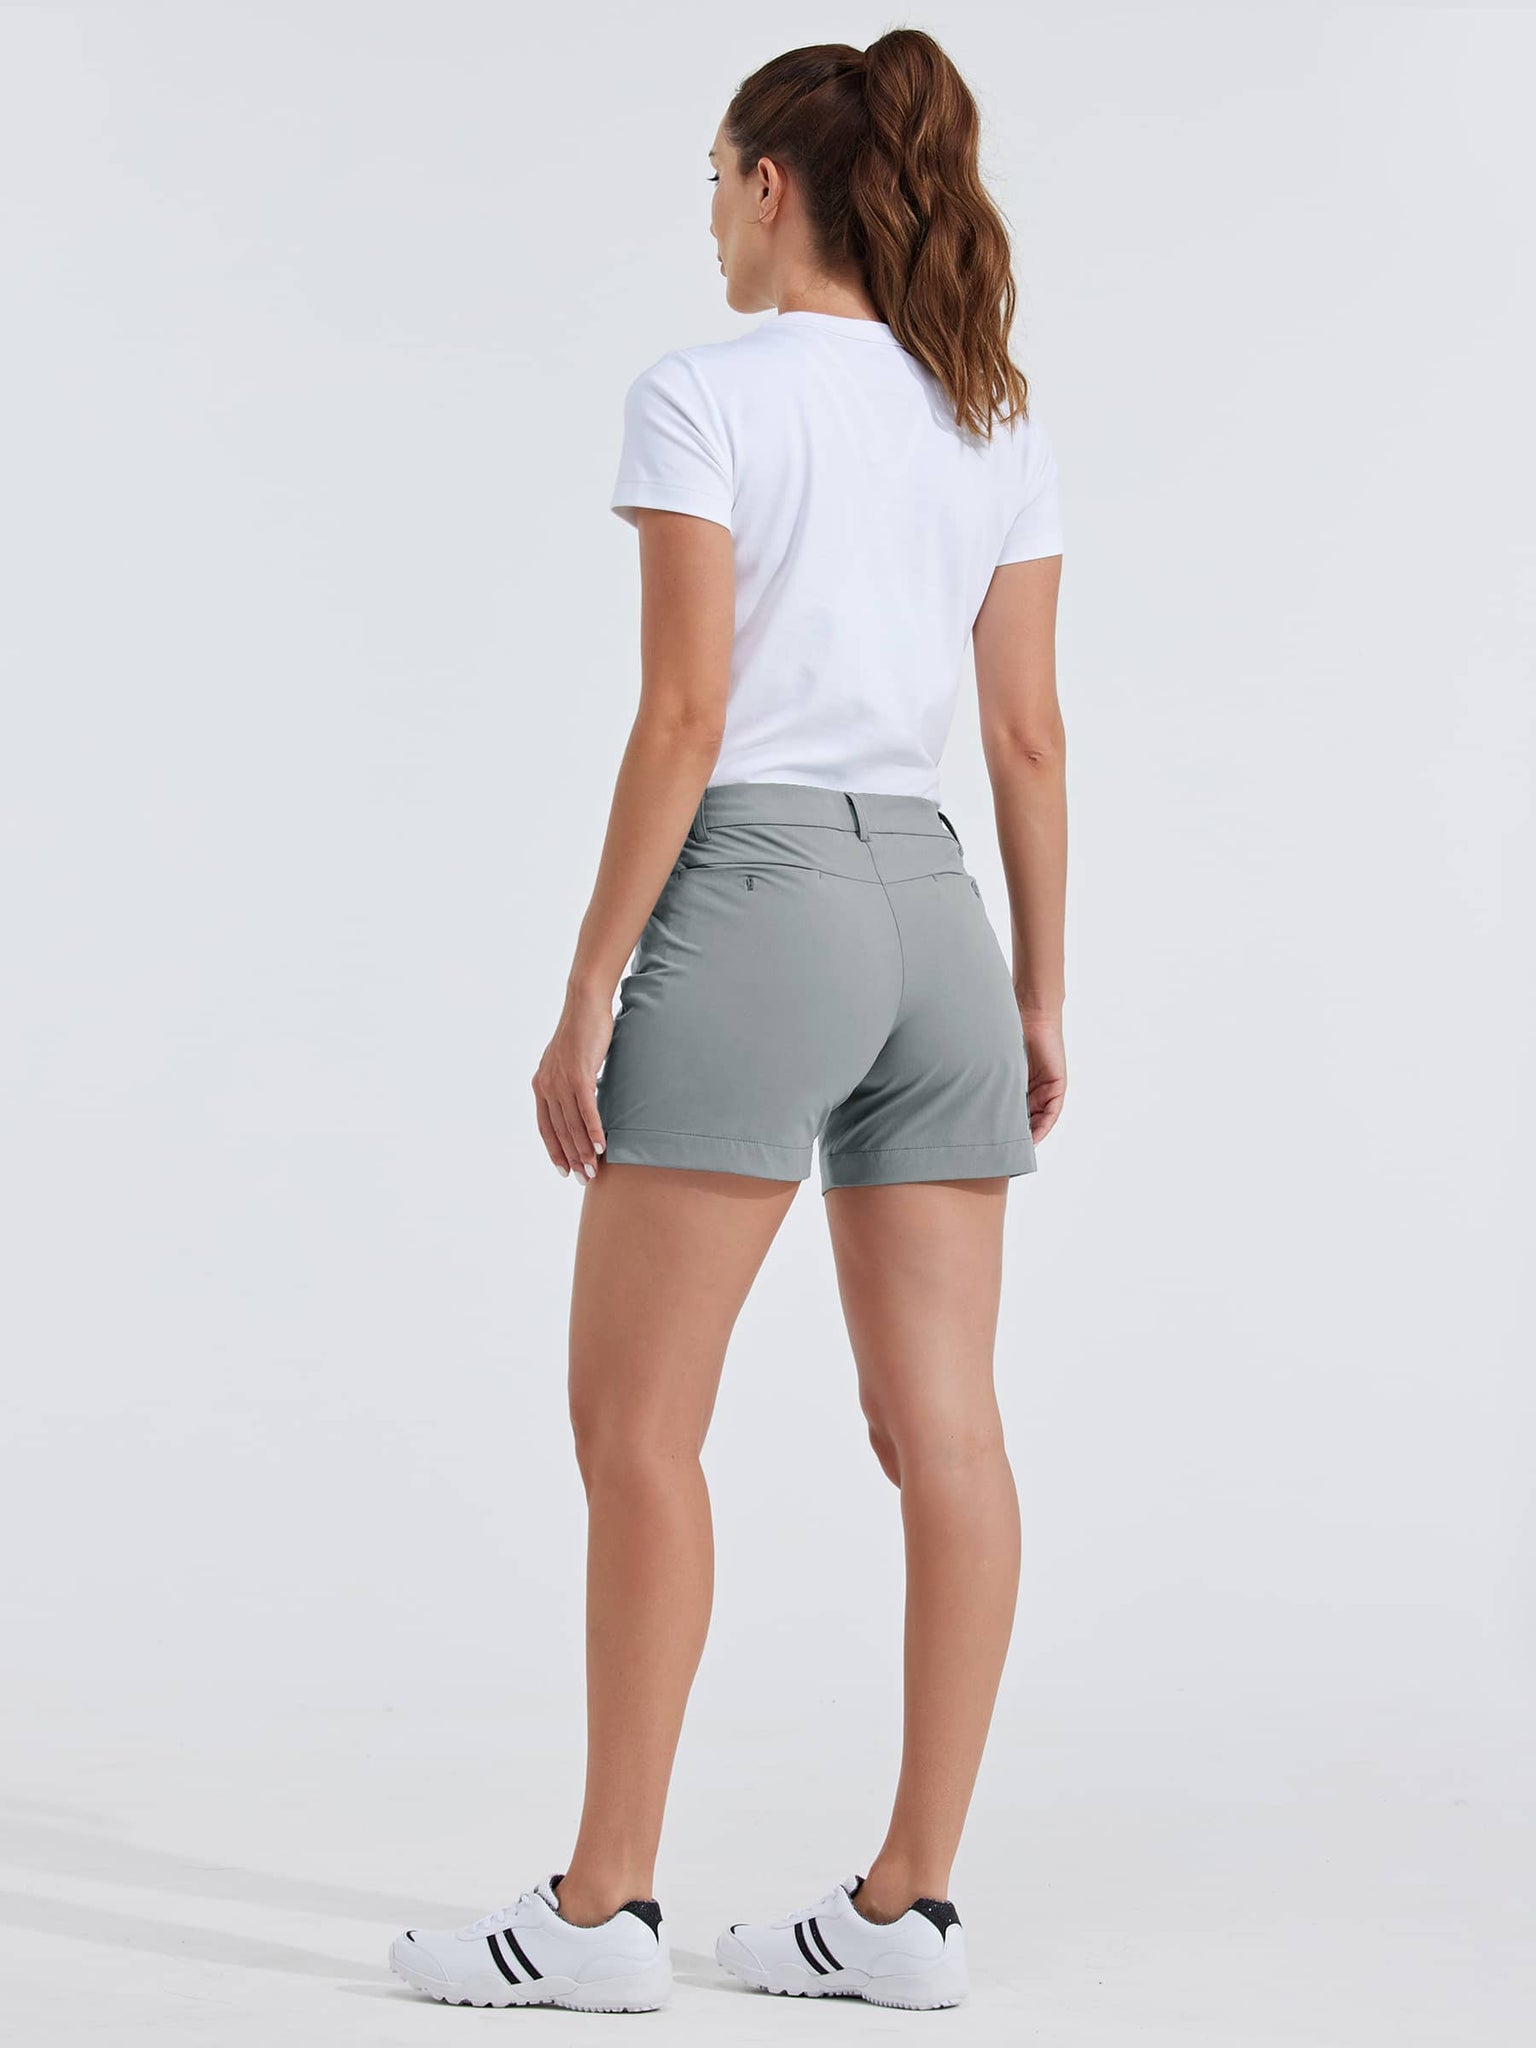 Willit Women's Golf Stretch Shorts 4.5 Inch